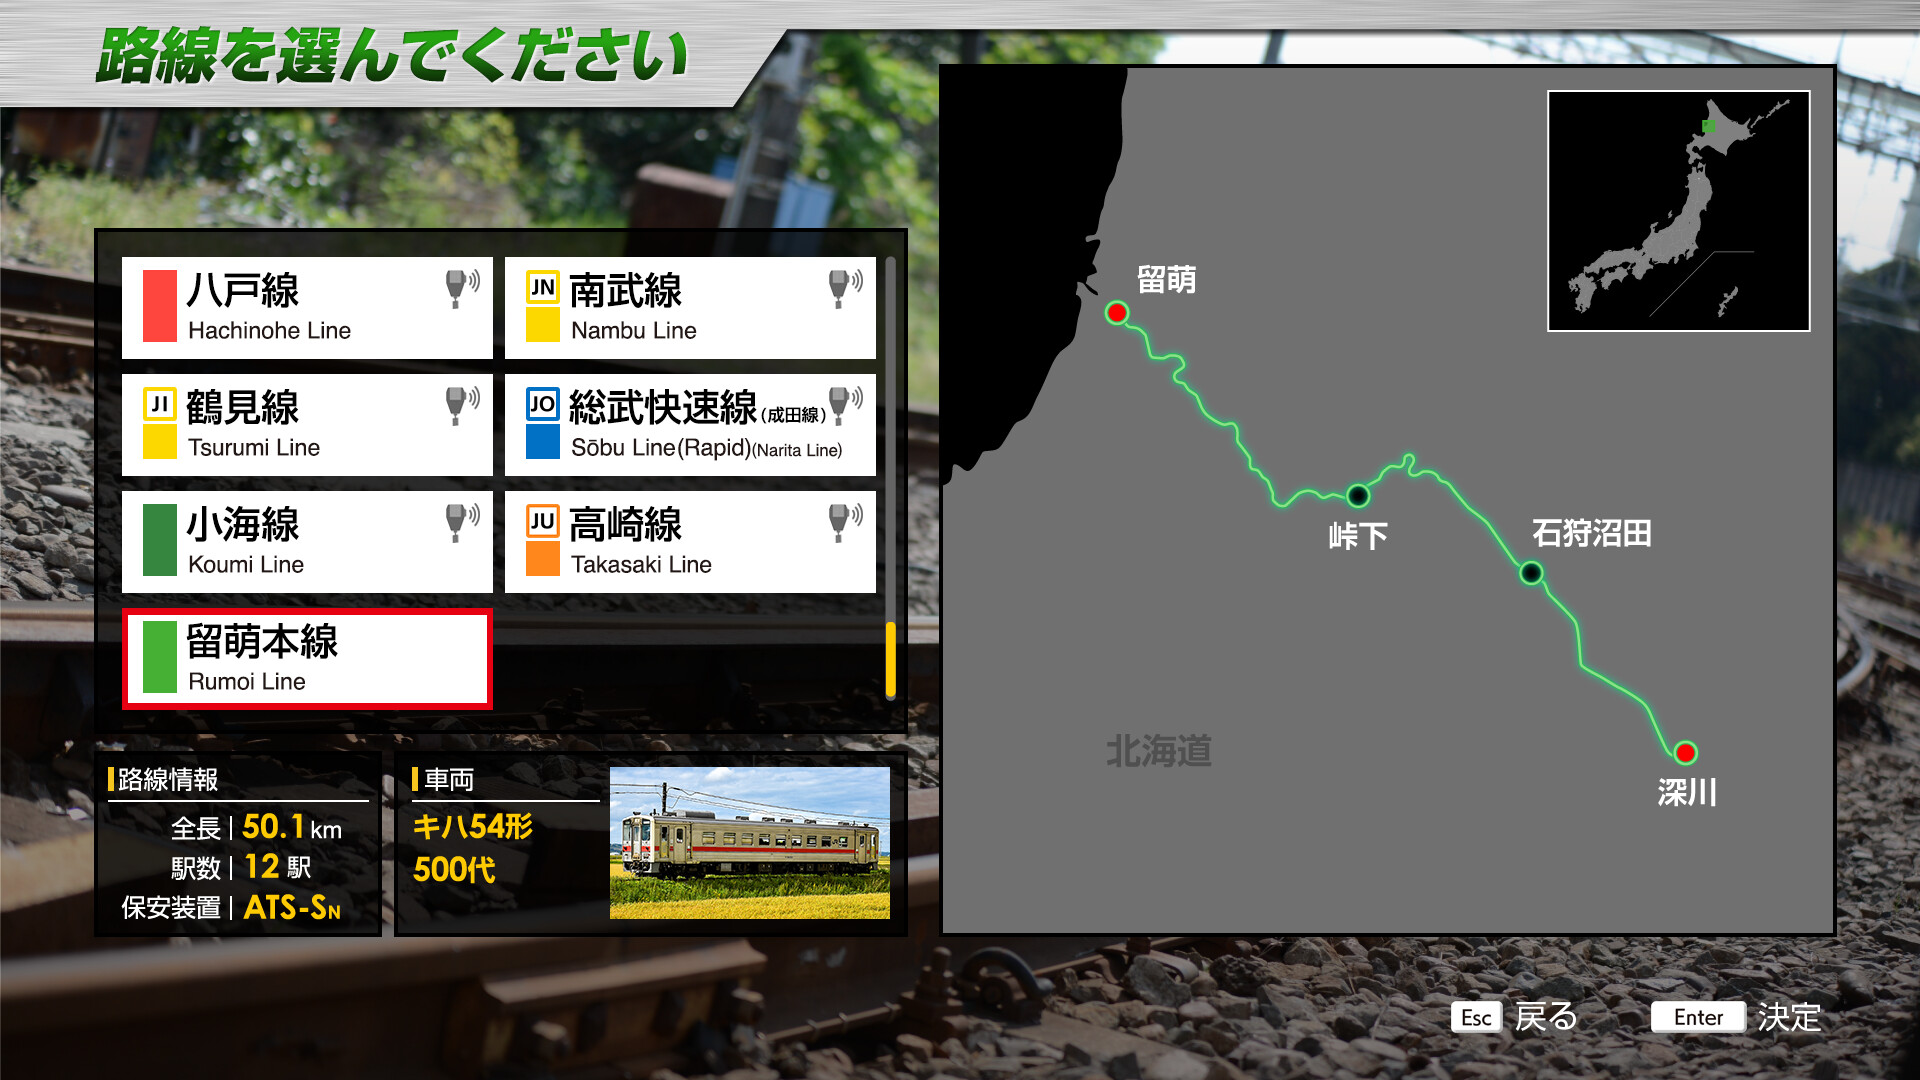 JR EAST Train Simulator: Rumoi Line (Fukagawa to Rumoi) Kiha 54-500 series Featured Screenshot #1